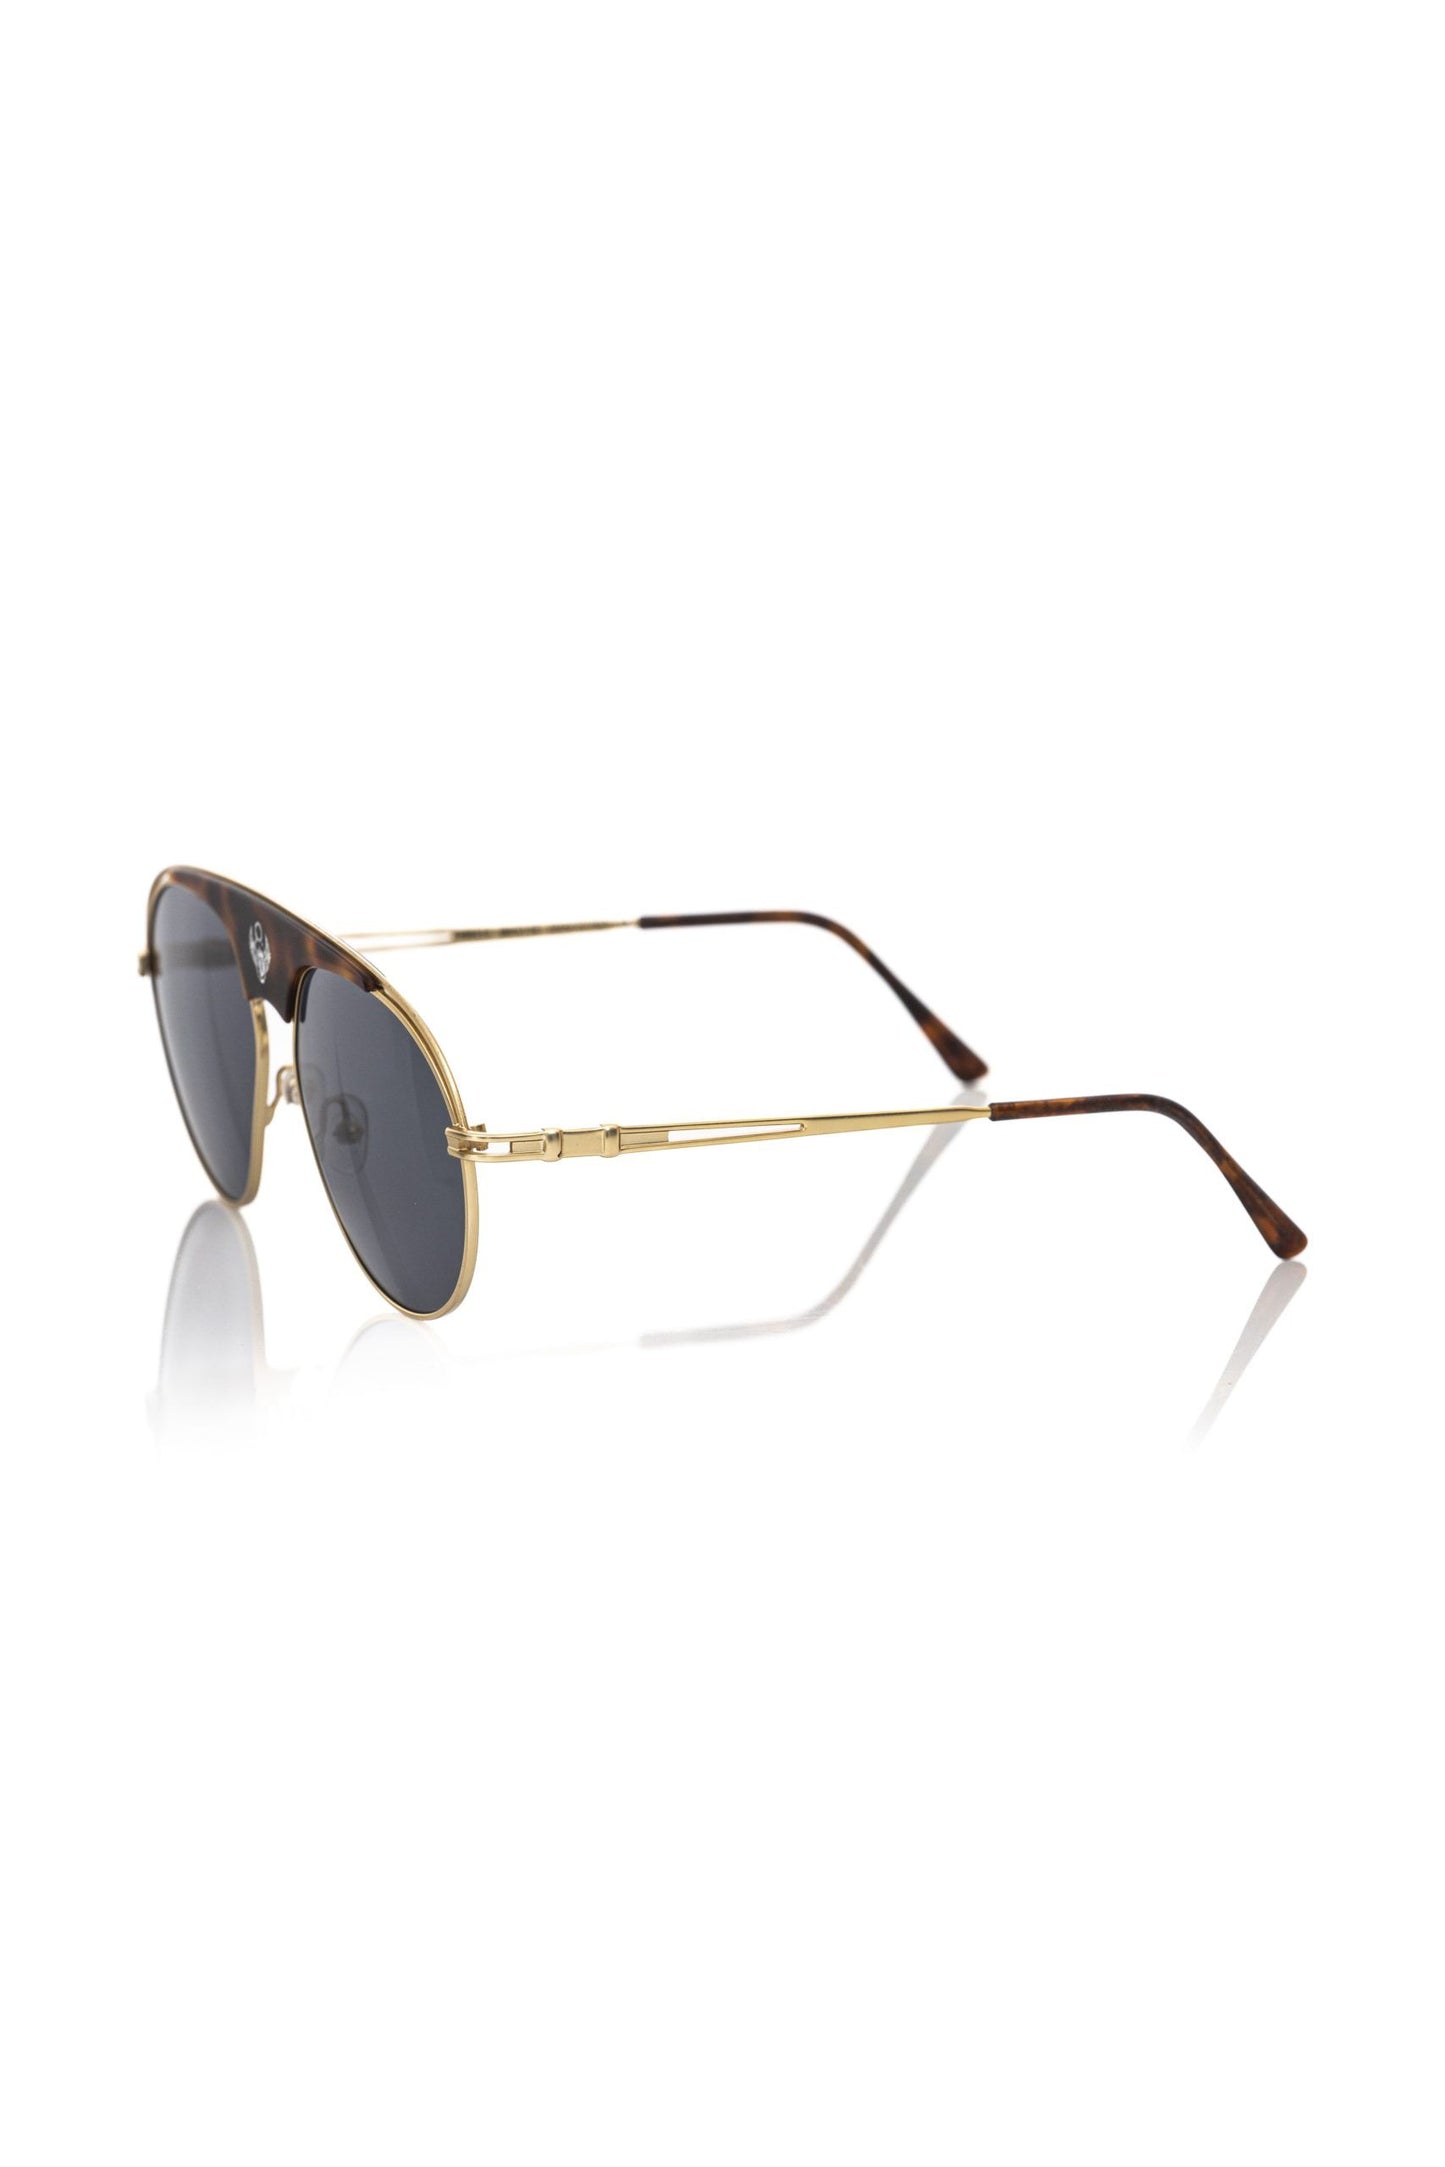 Frankie Morello Elegant Shield Sunglasses with Havana Accent